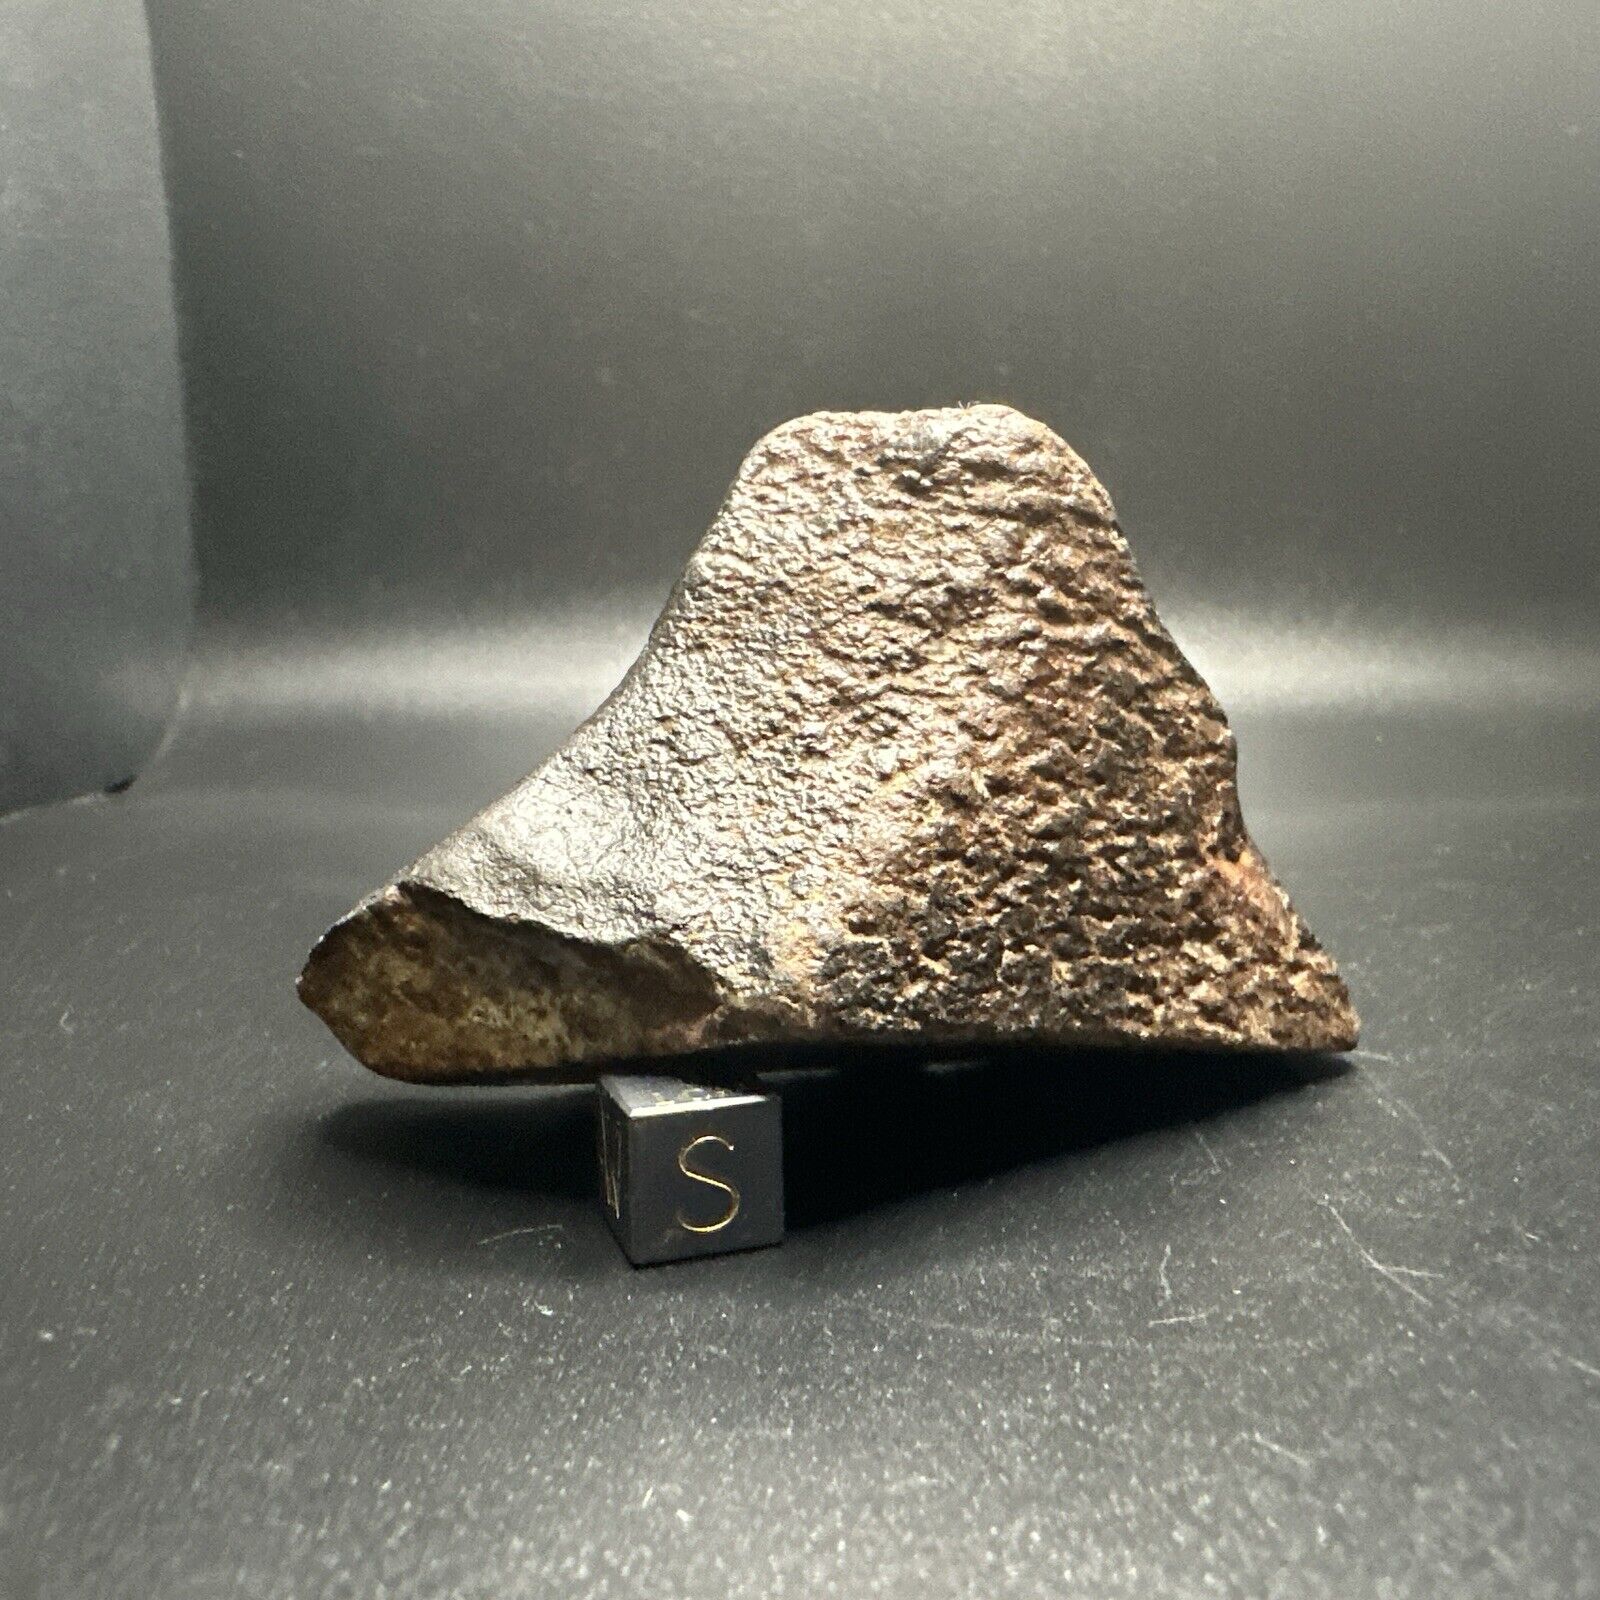 Ordinary Chondrite Meteorite 183 g Unc. Fusion Crust And Fresh Interior Matrix